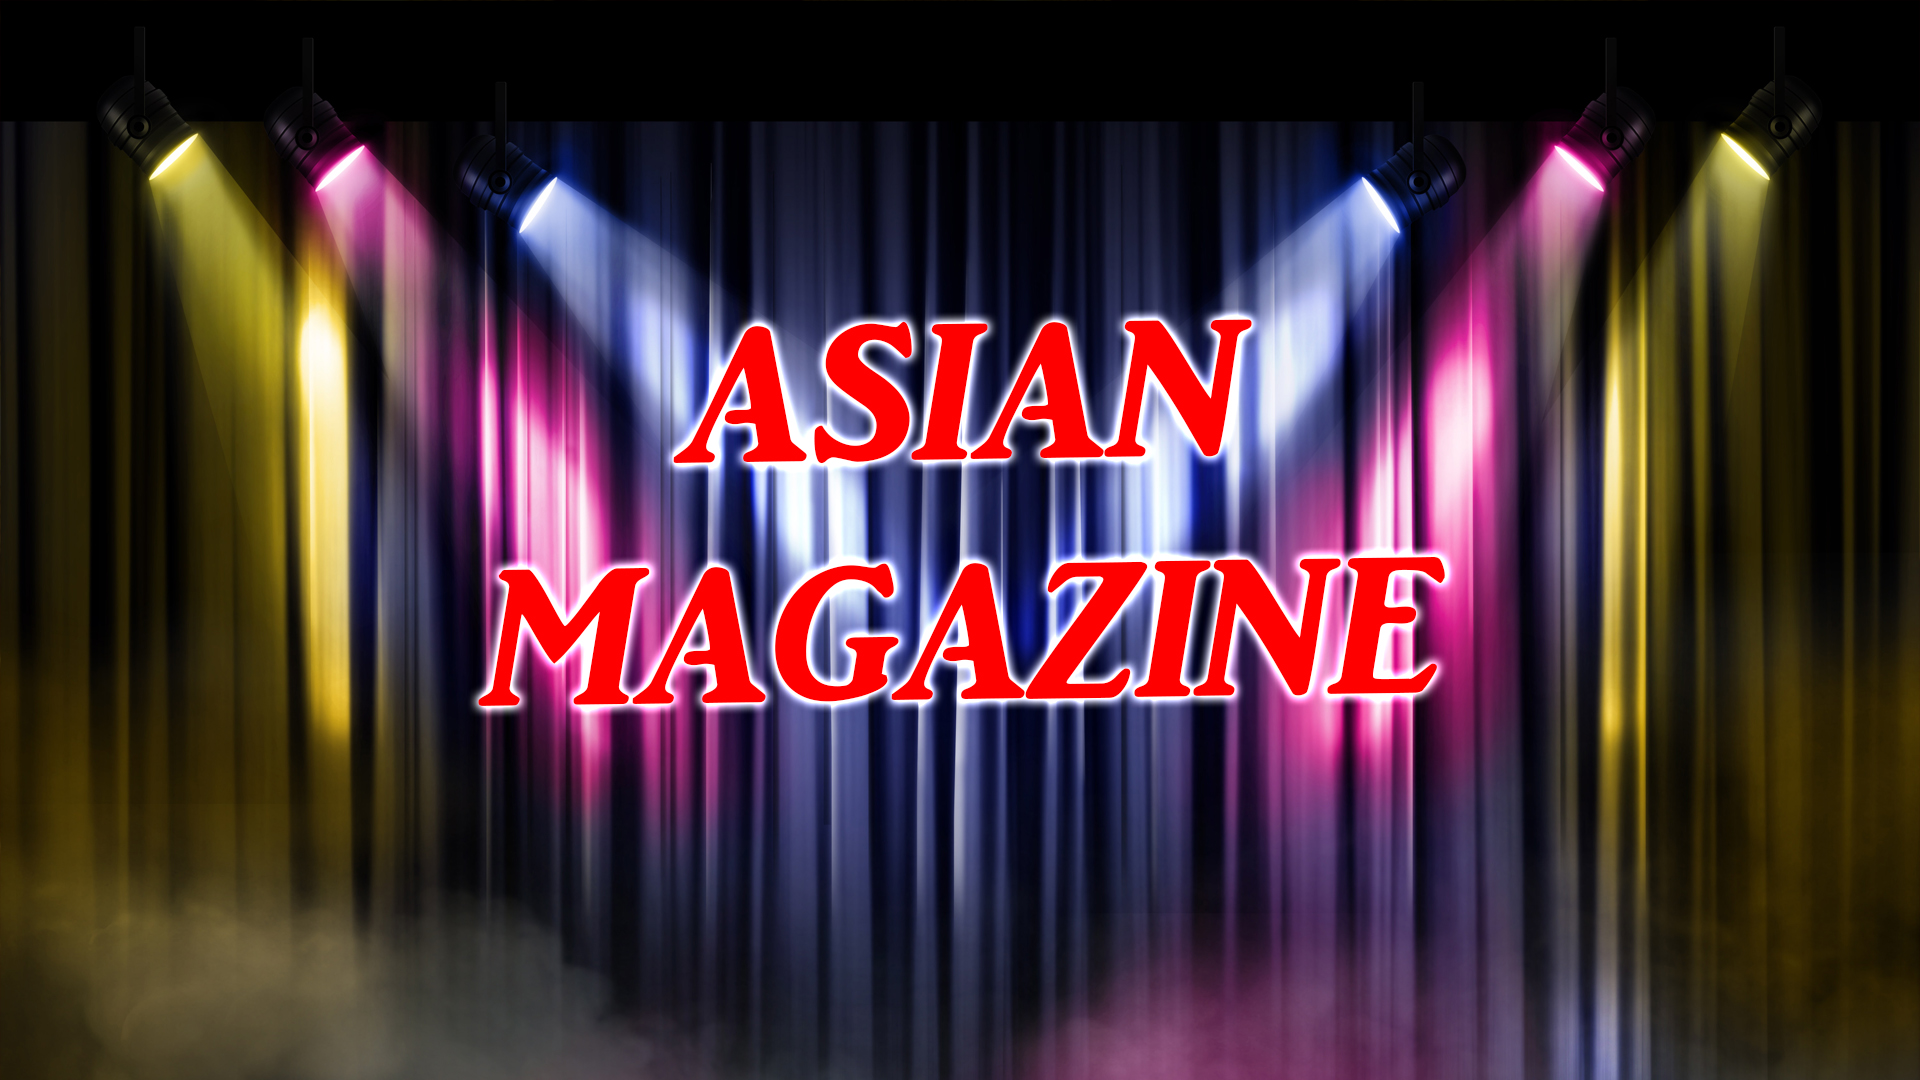 Asian Magazine.jpg